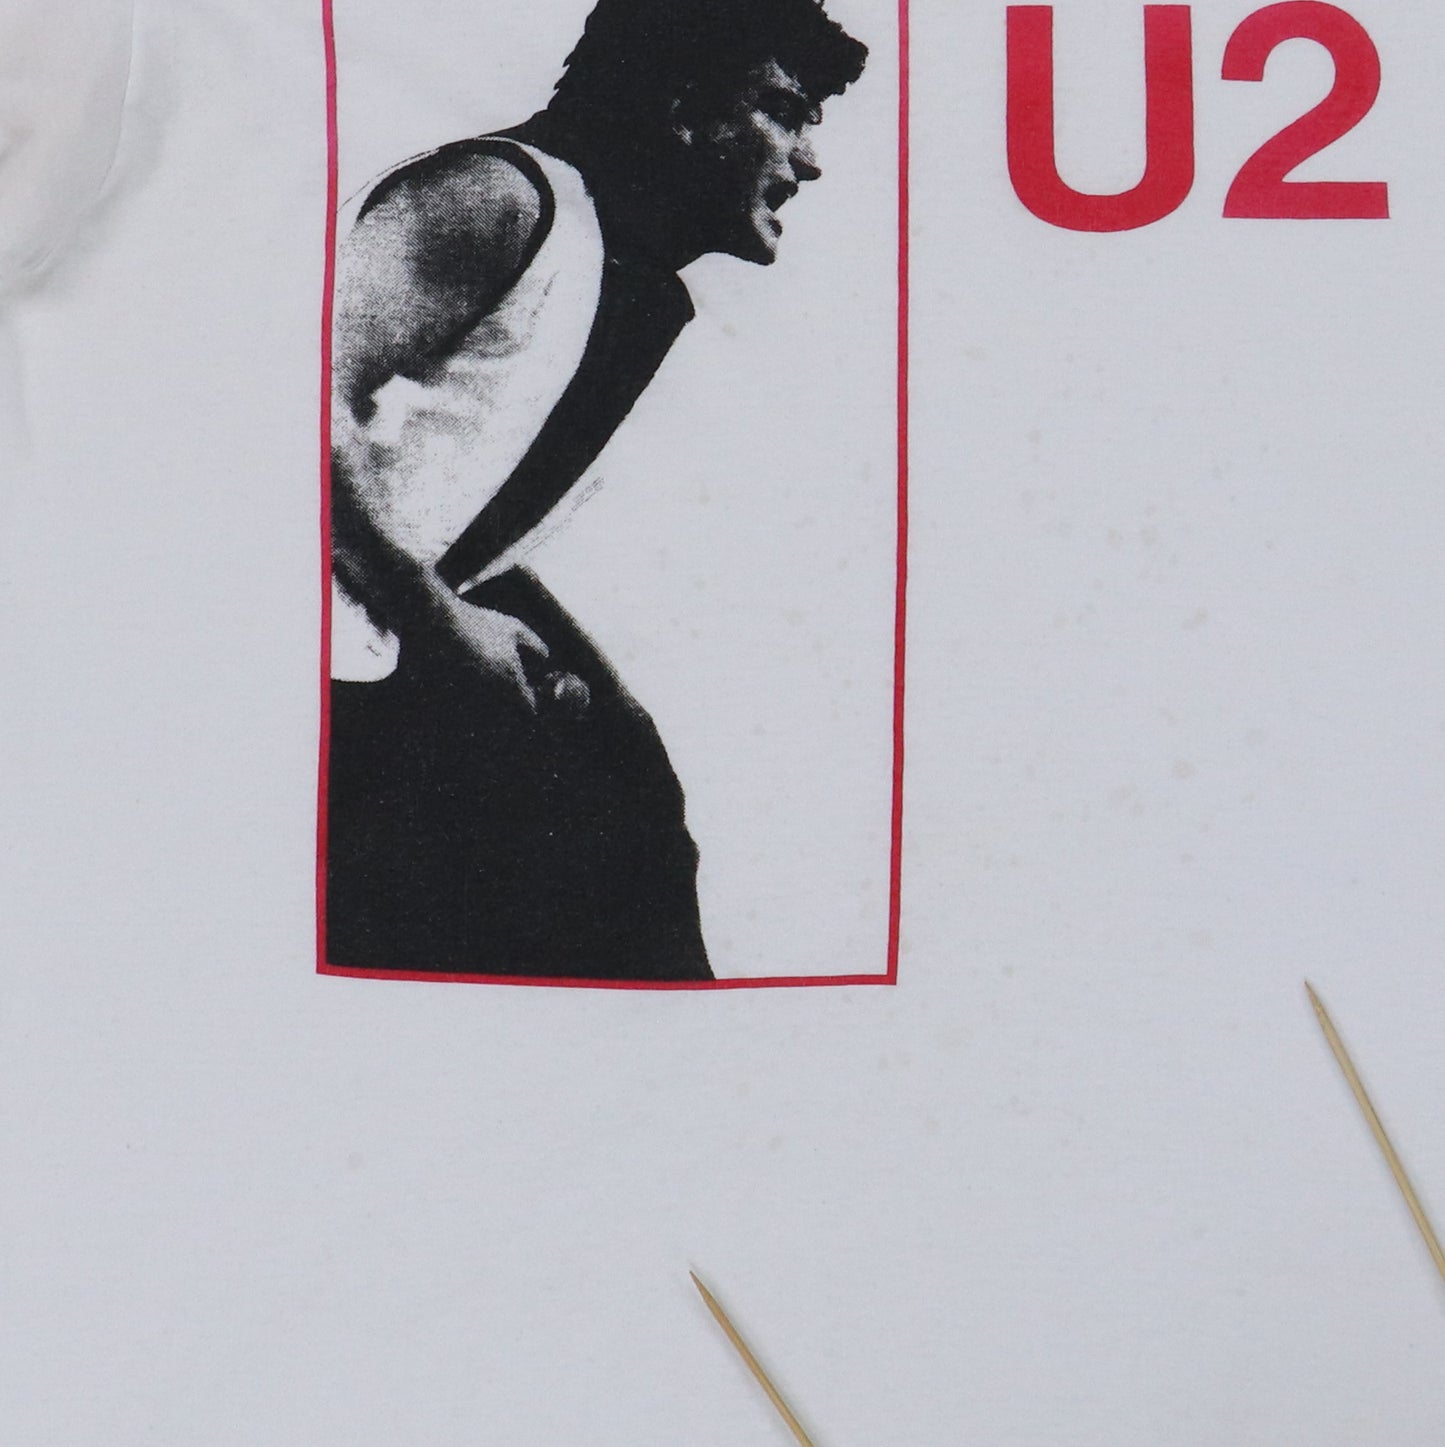 1980s U2 Shirt